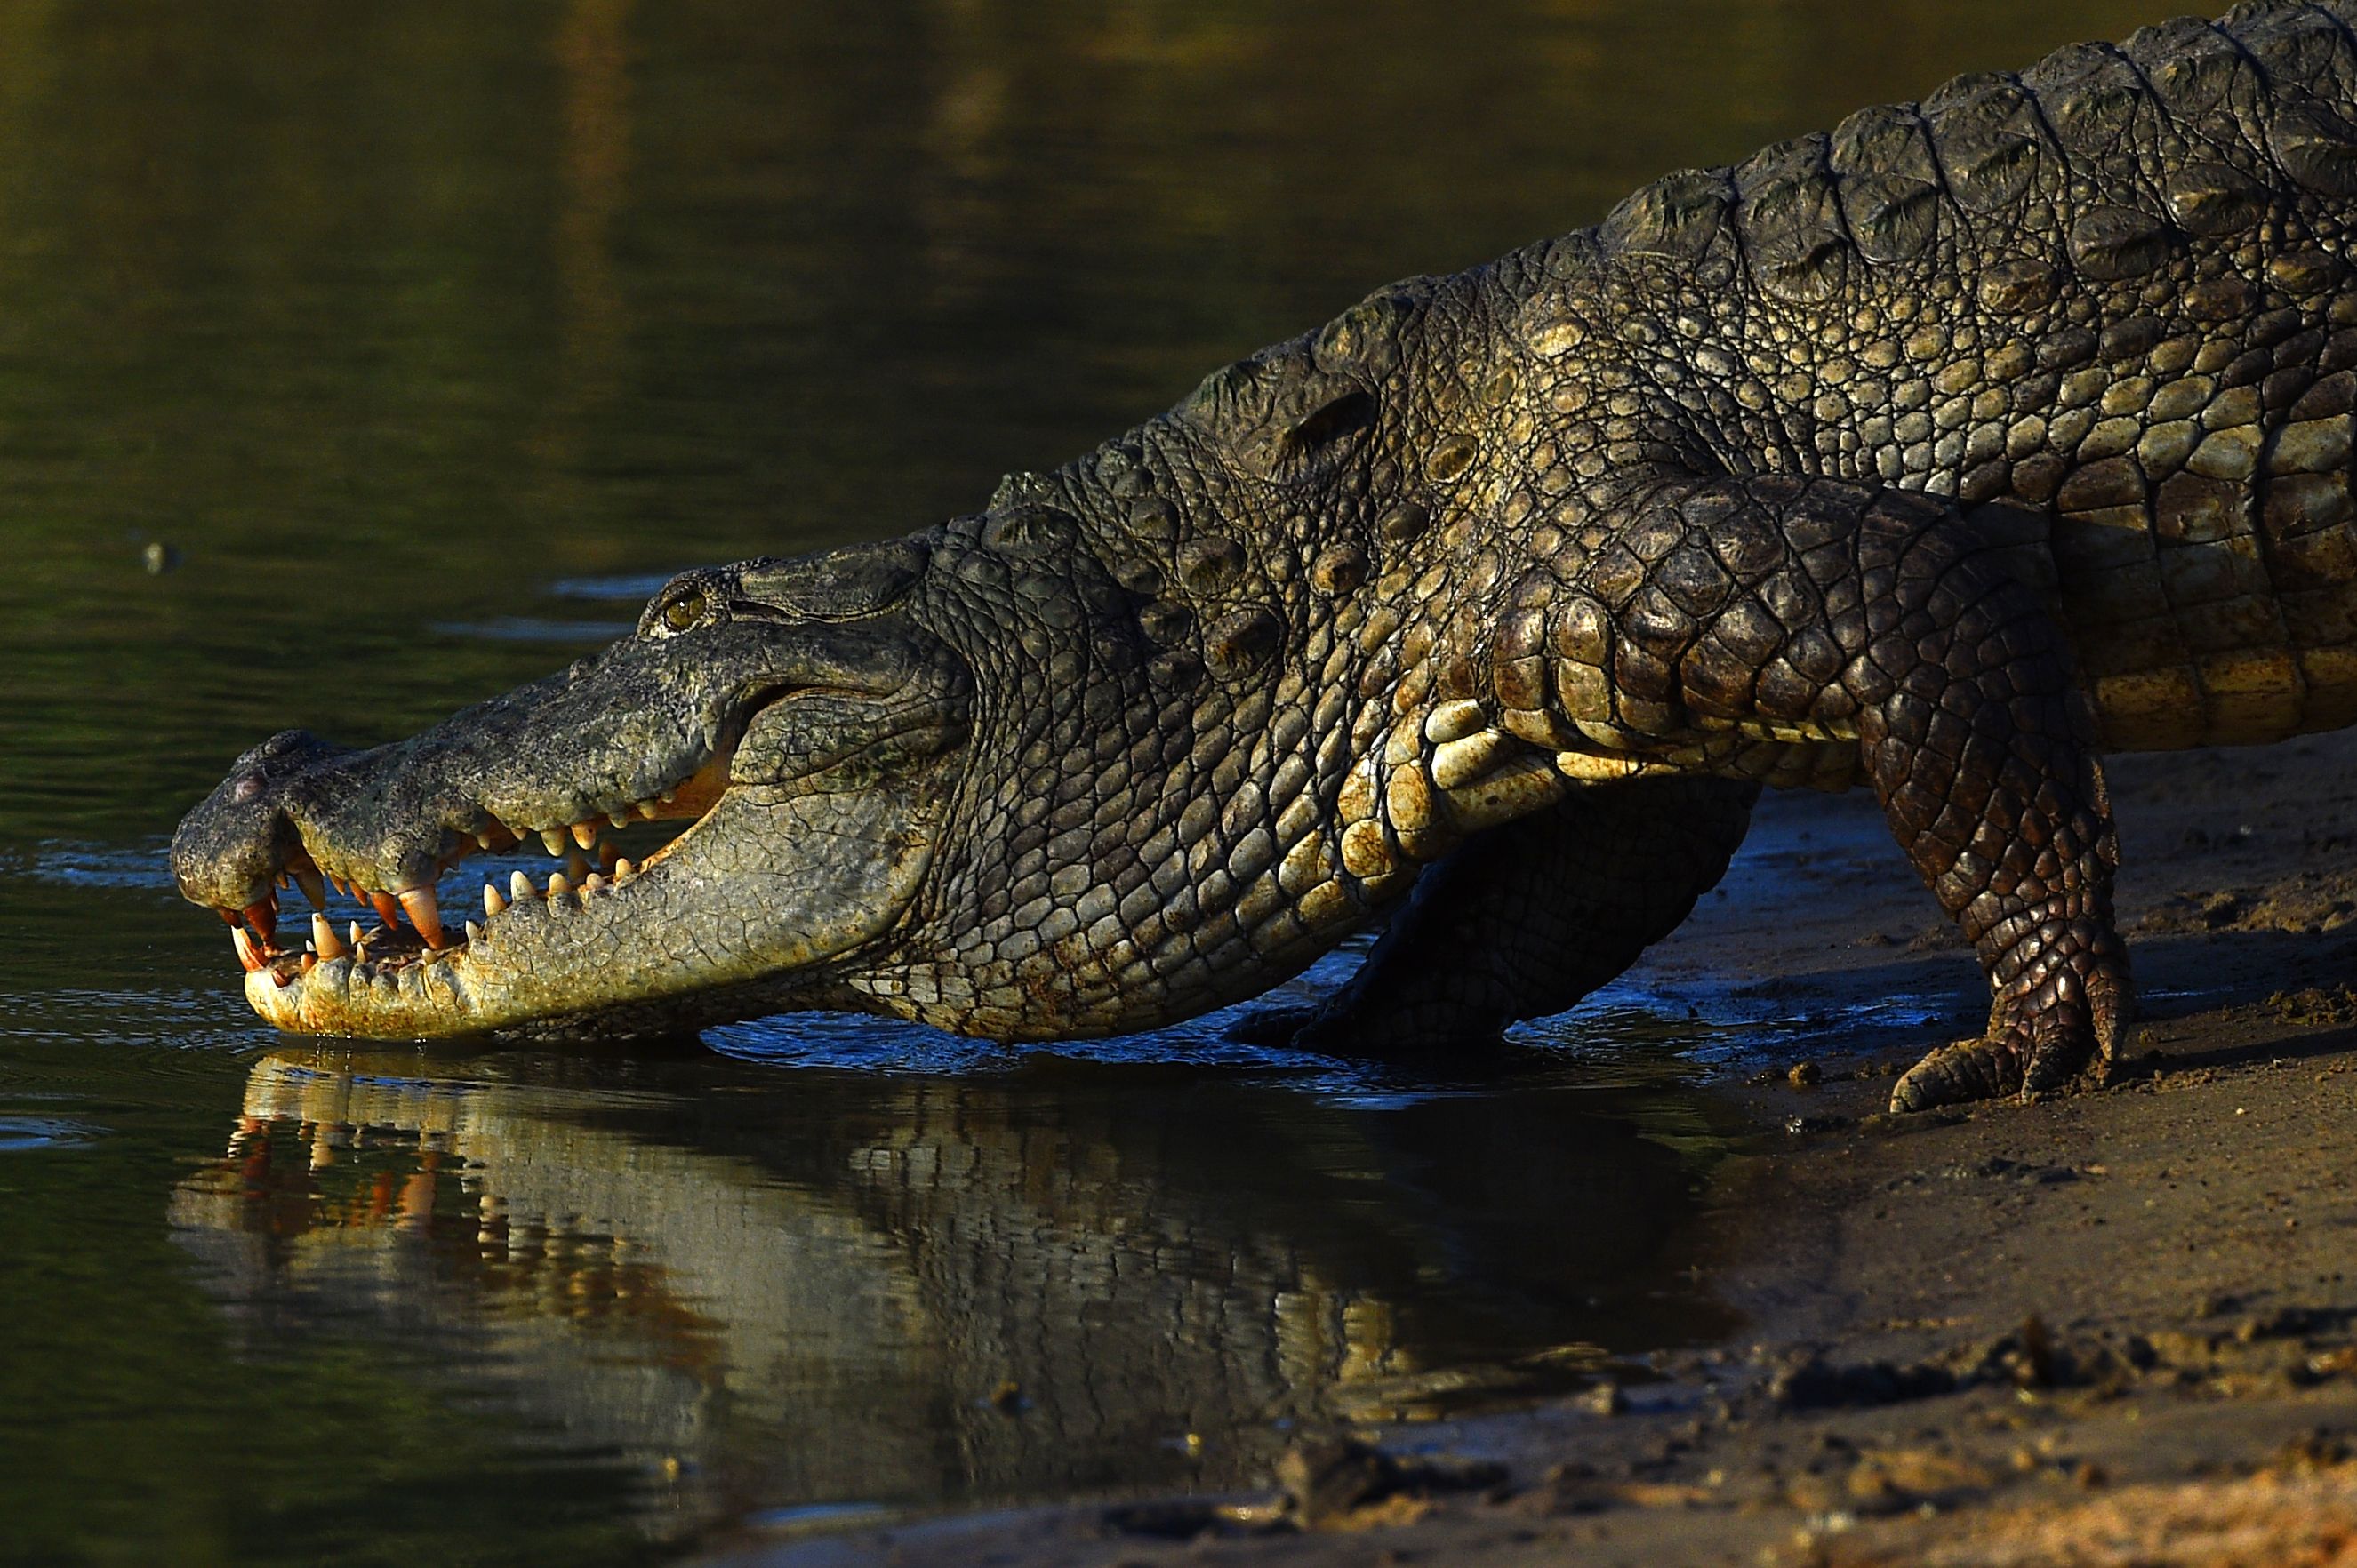 Representational image: Man bites crocodile back to save himself in Australia